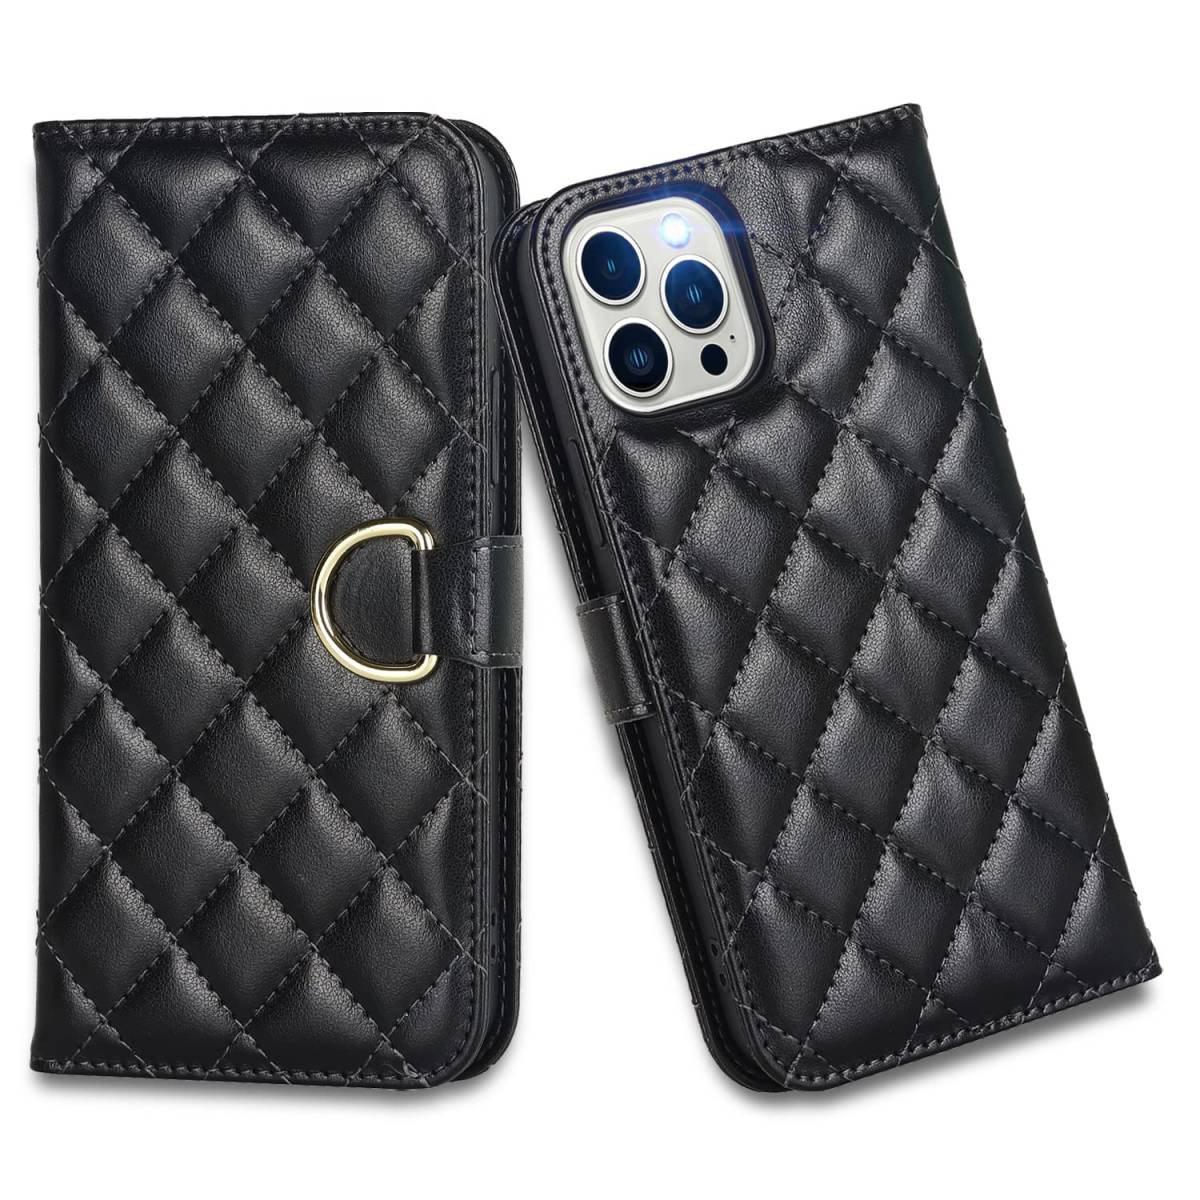 [ special price sale ]iPhone 12 Havaya Pro Max case iphone12 Pro Max case smartphone case notebook type 